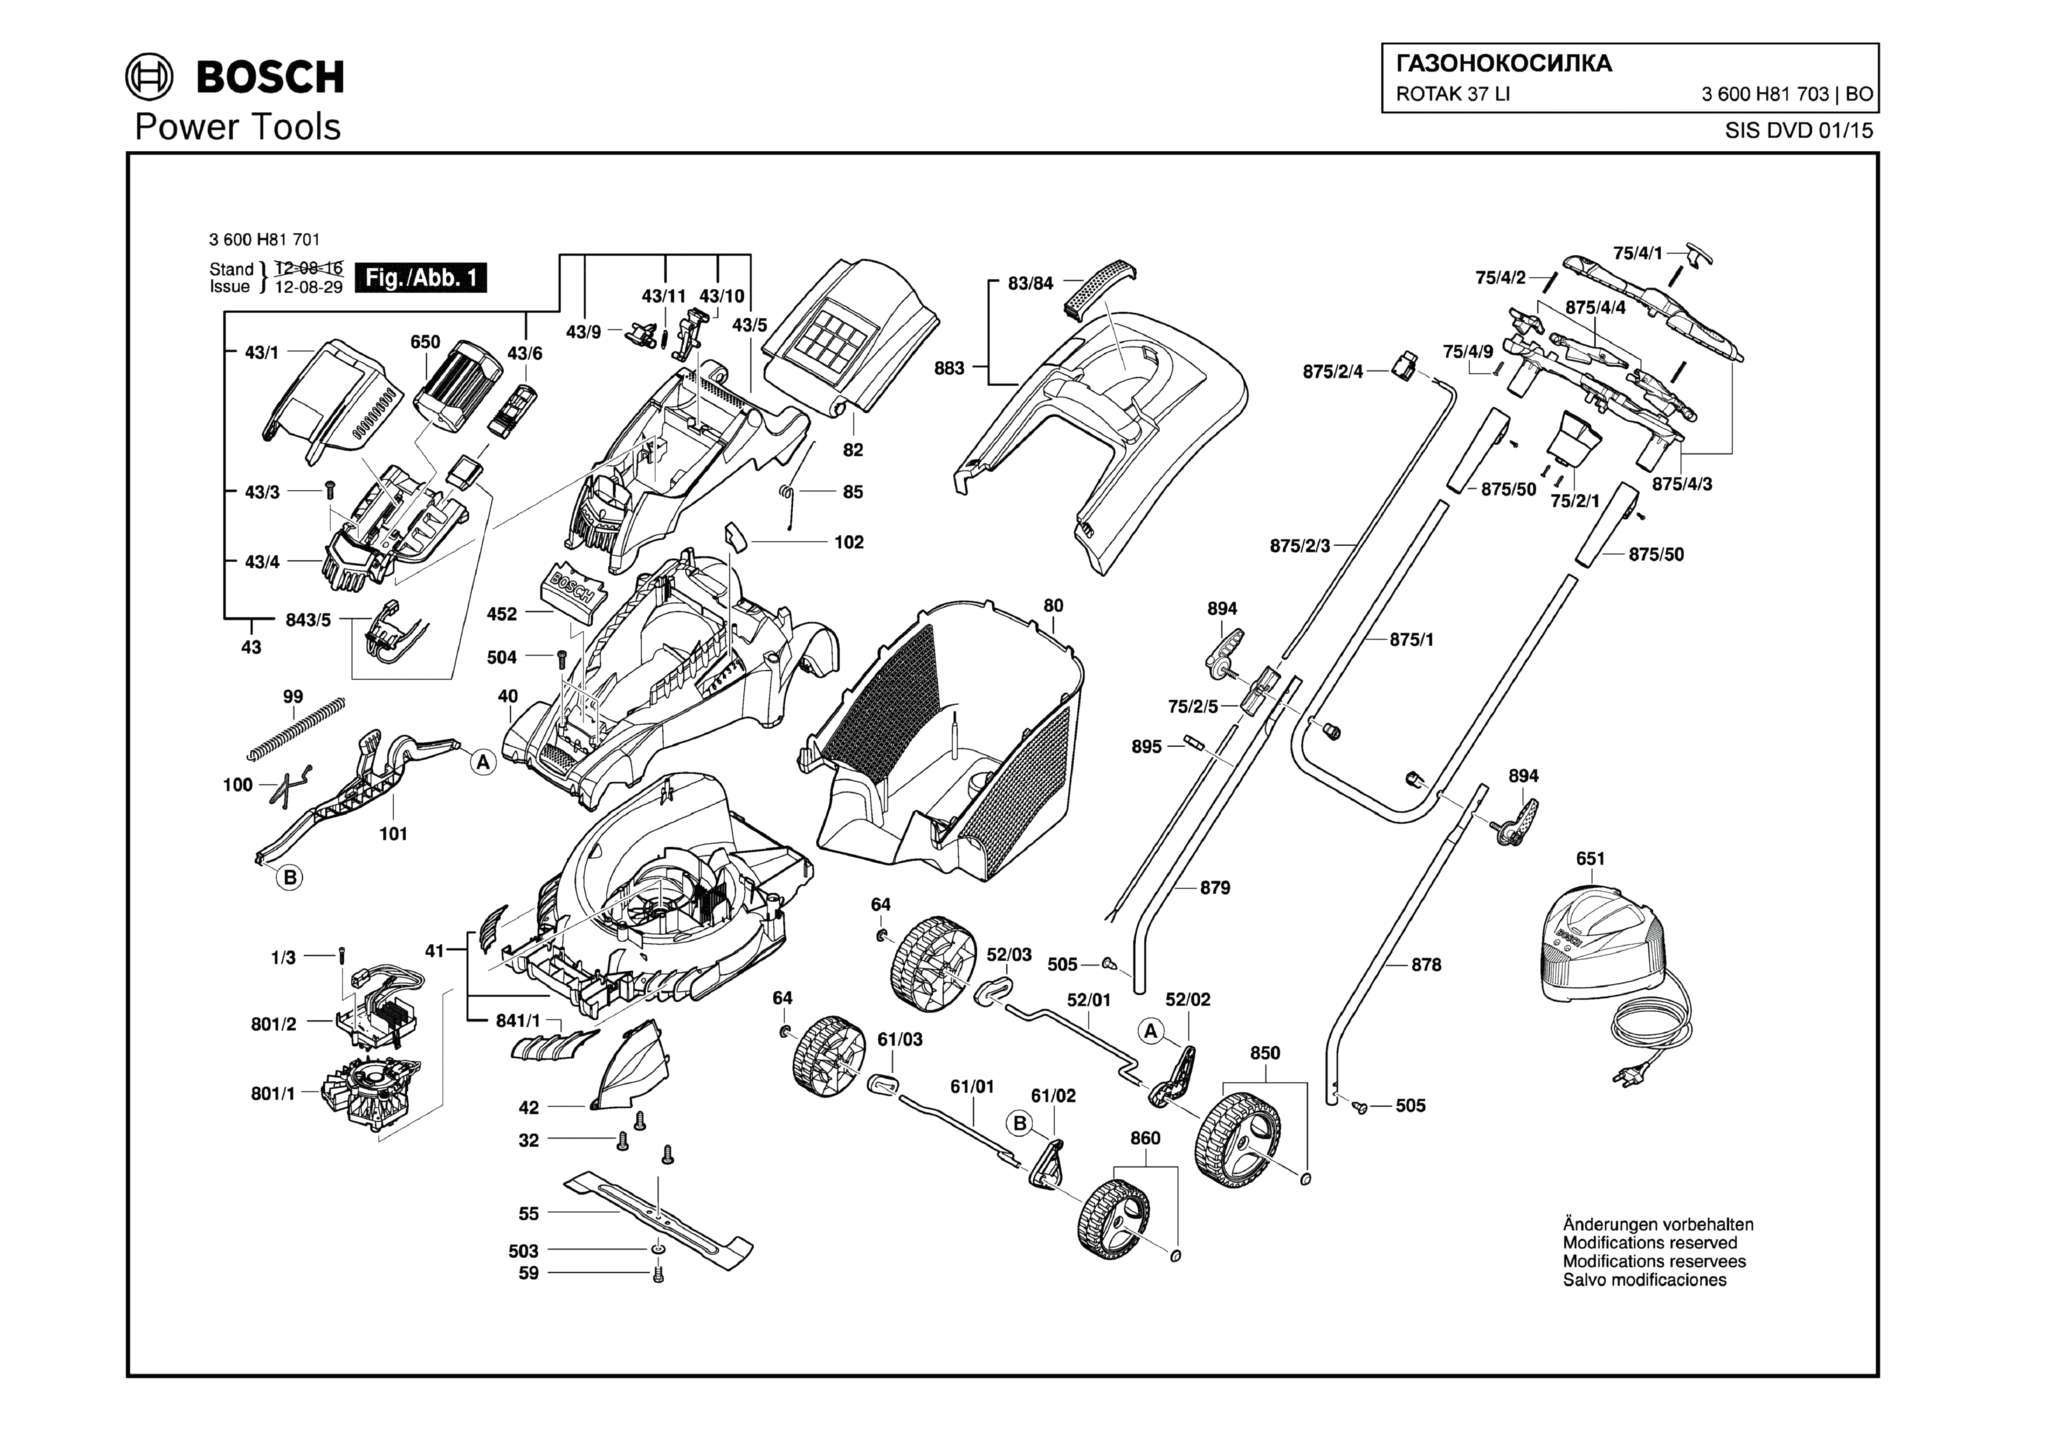 Запчасти, схема и деталировка Bosch ROTAK 37 LI (ТИП 3600H81703)